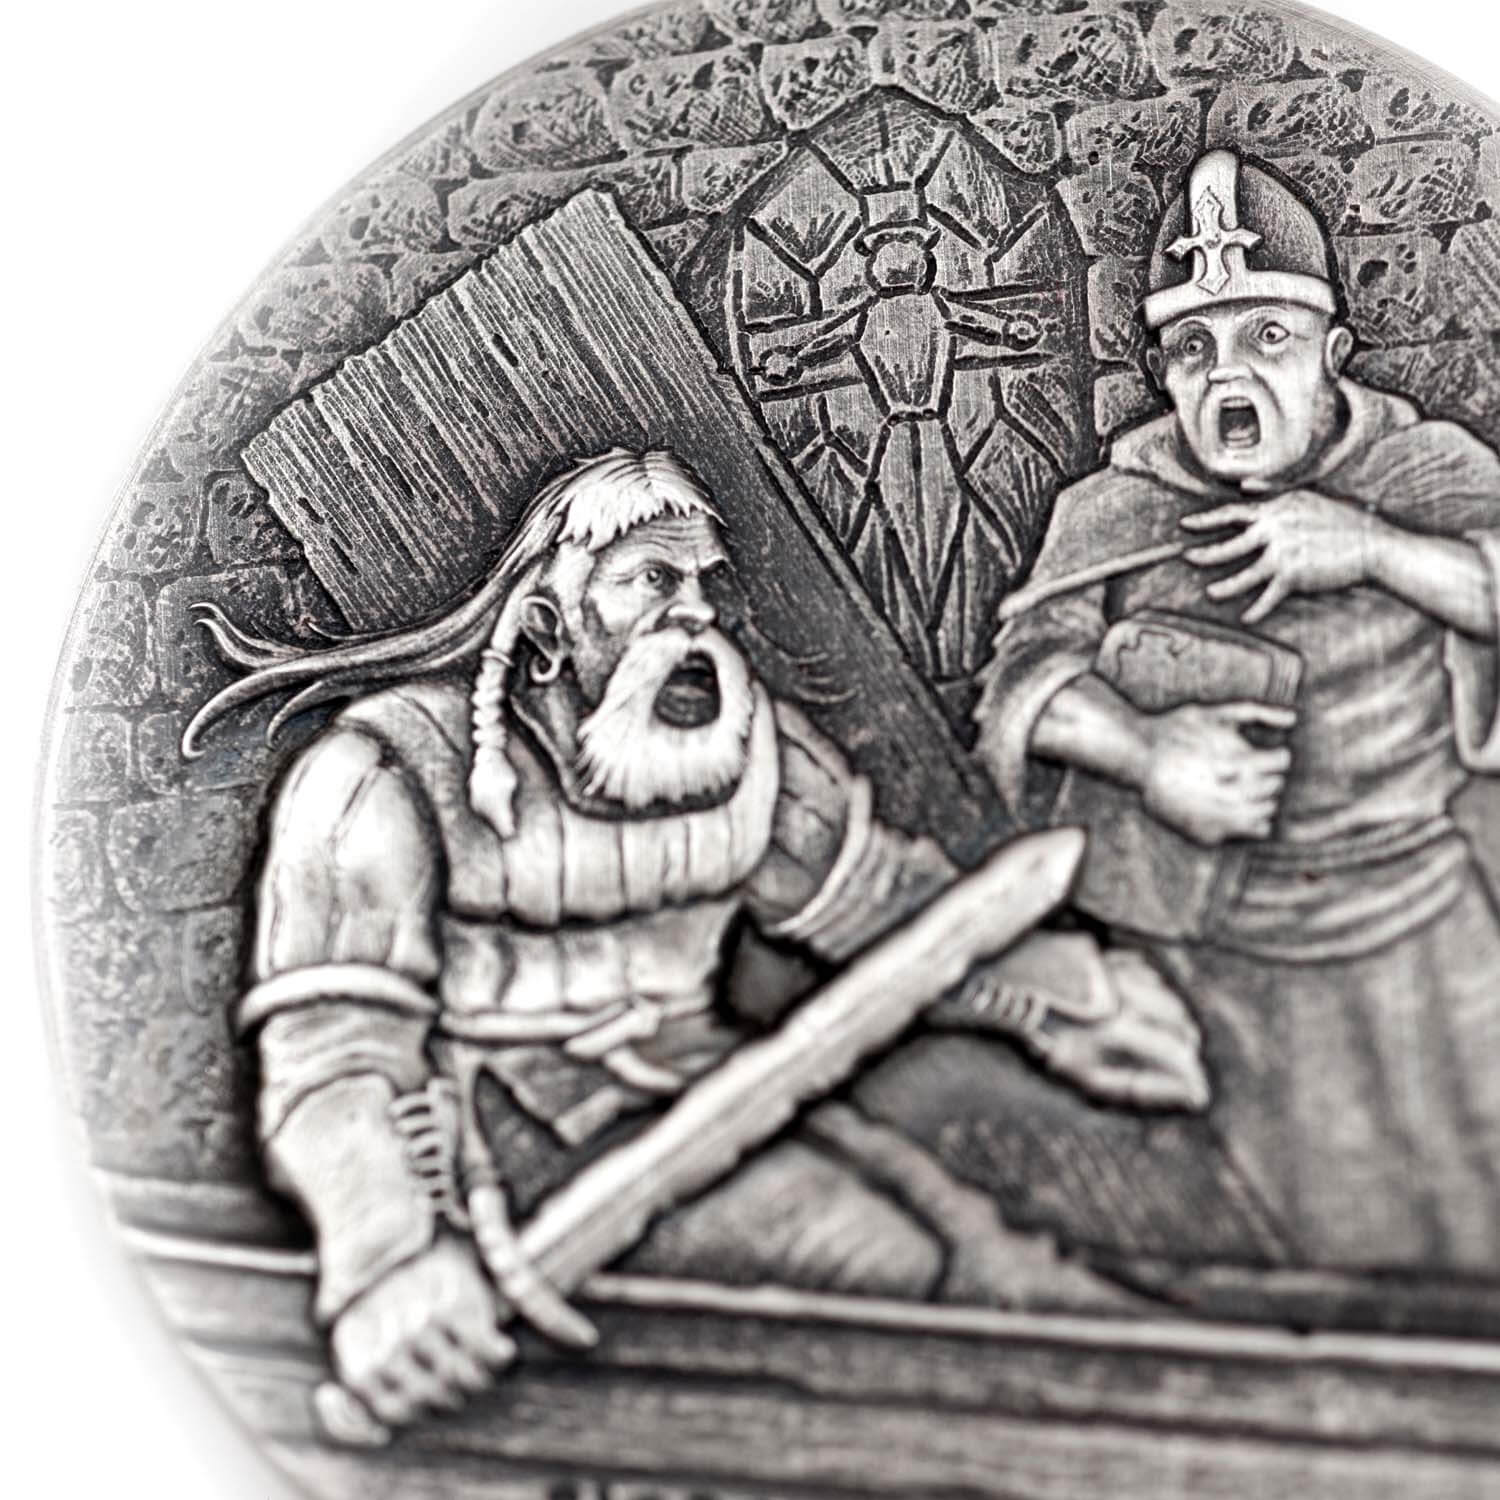 2016 Vikings, Bjorn Ironside 2 oz Silver Coin